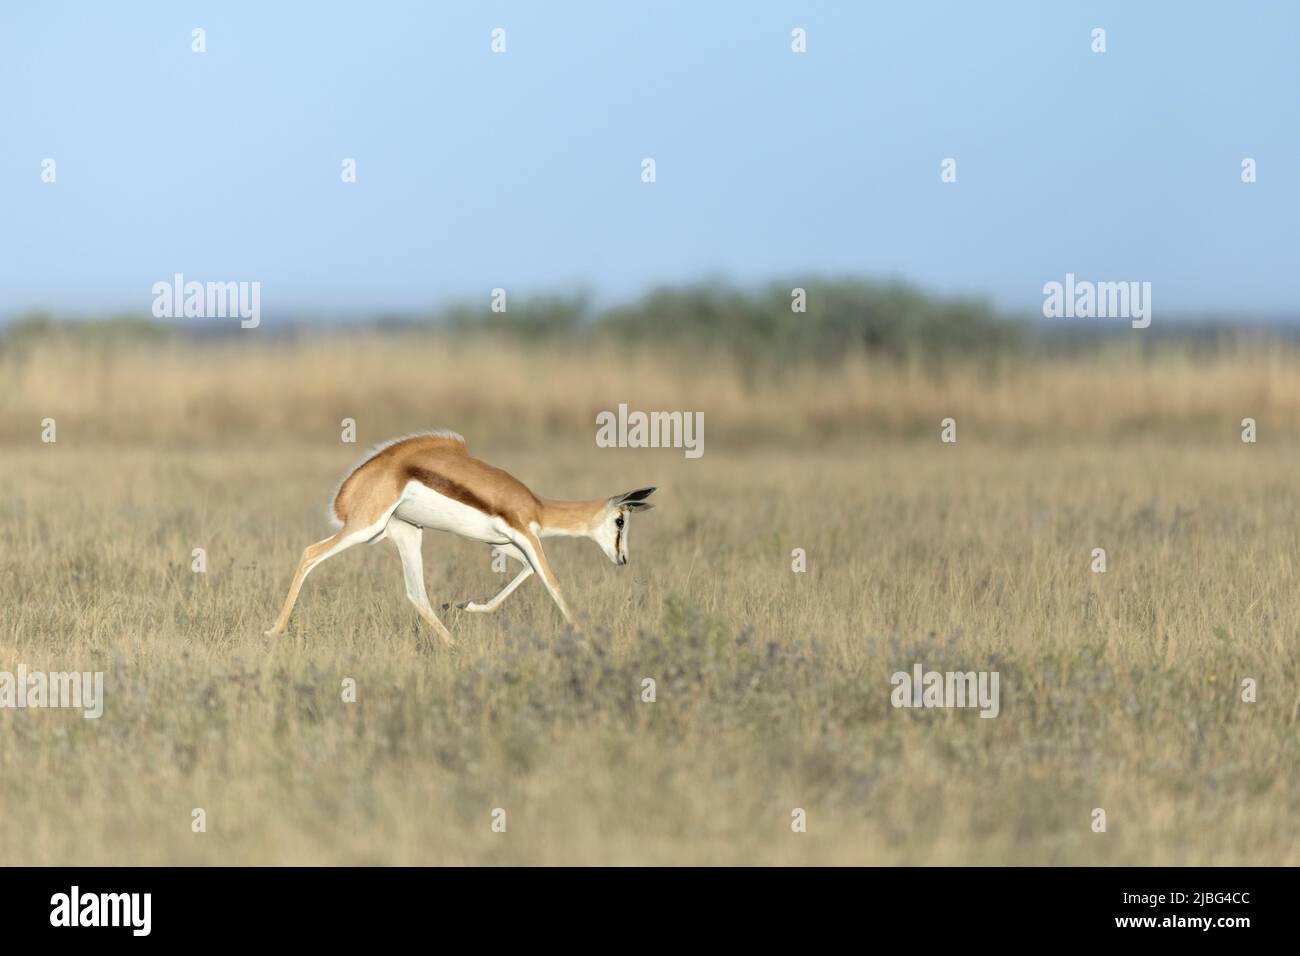 Springbok pronking in Kalahari semi desert Botswana Stock Photo